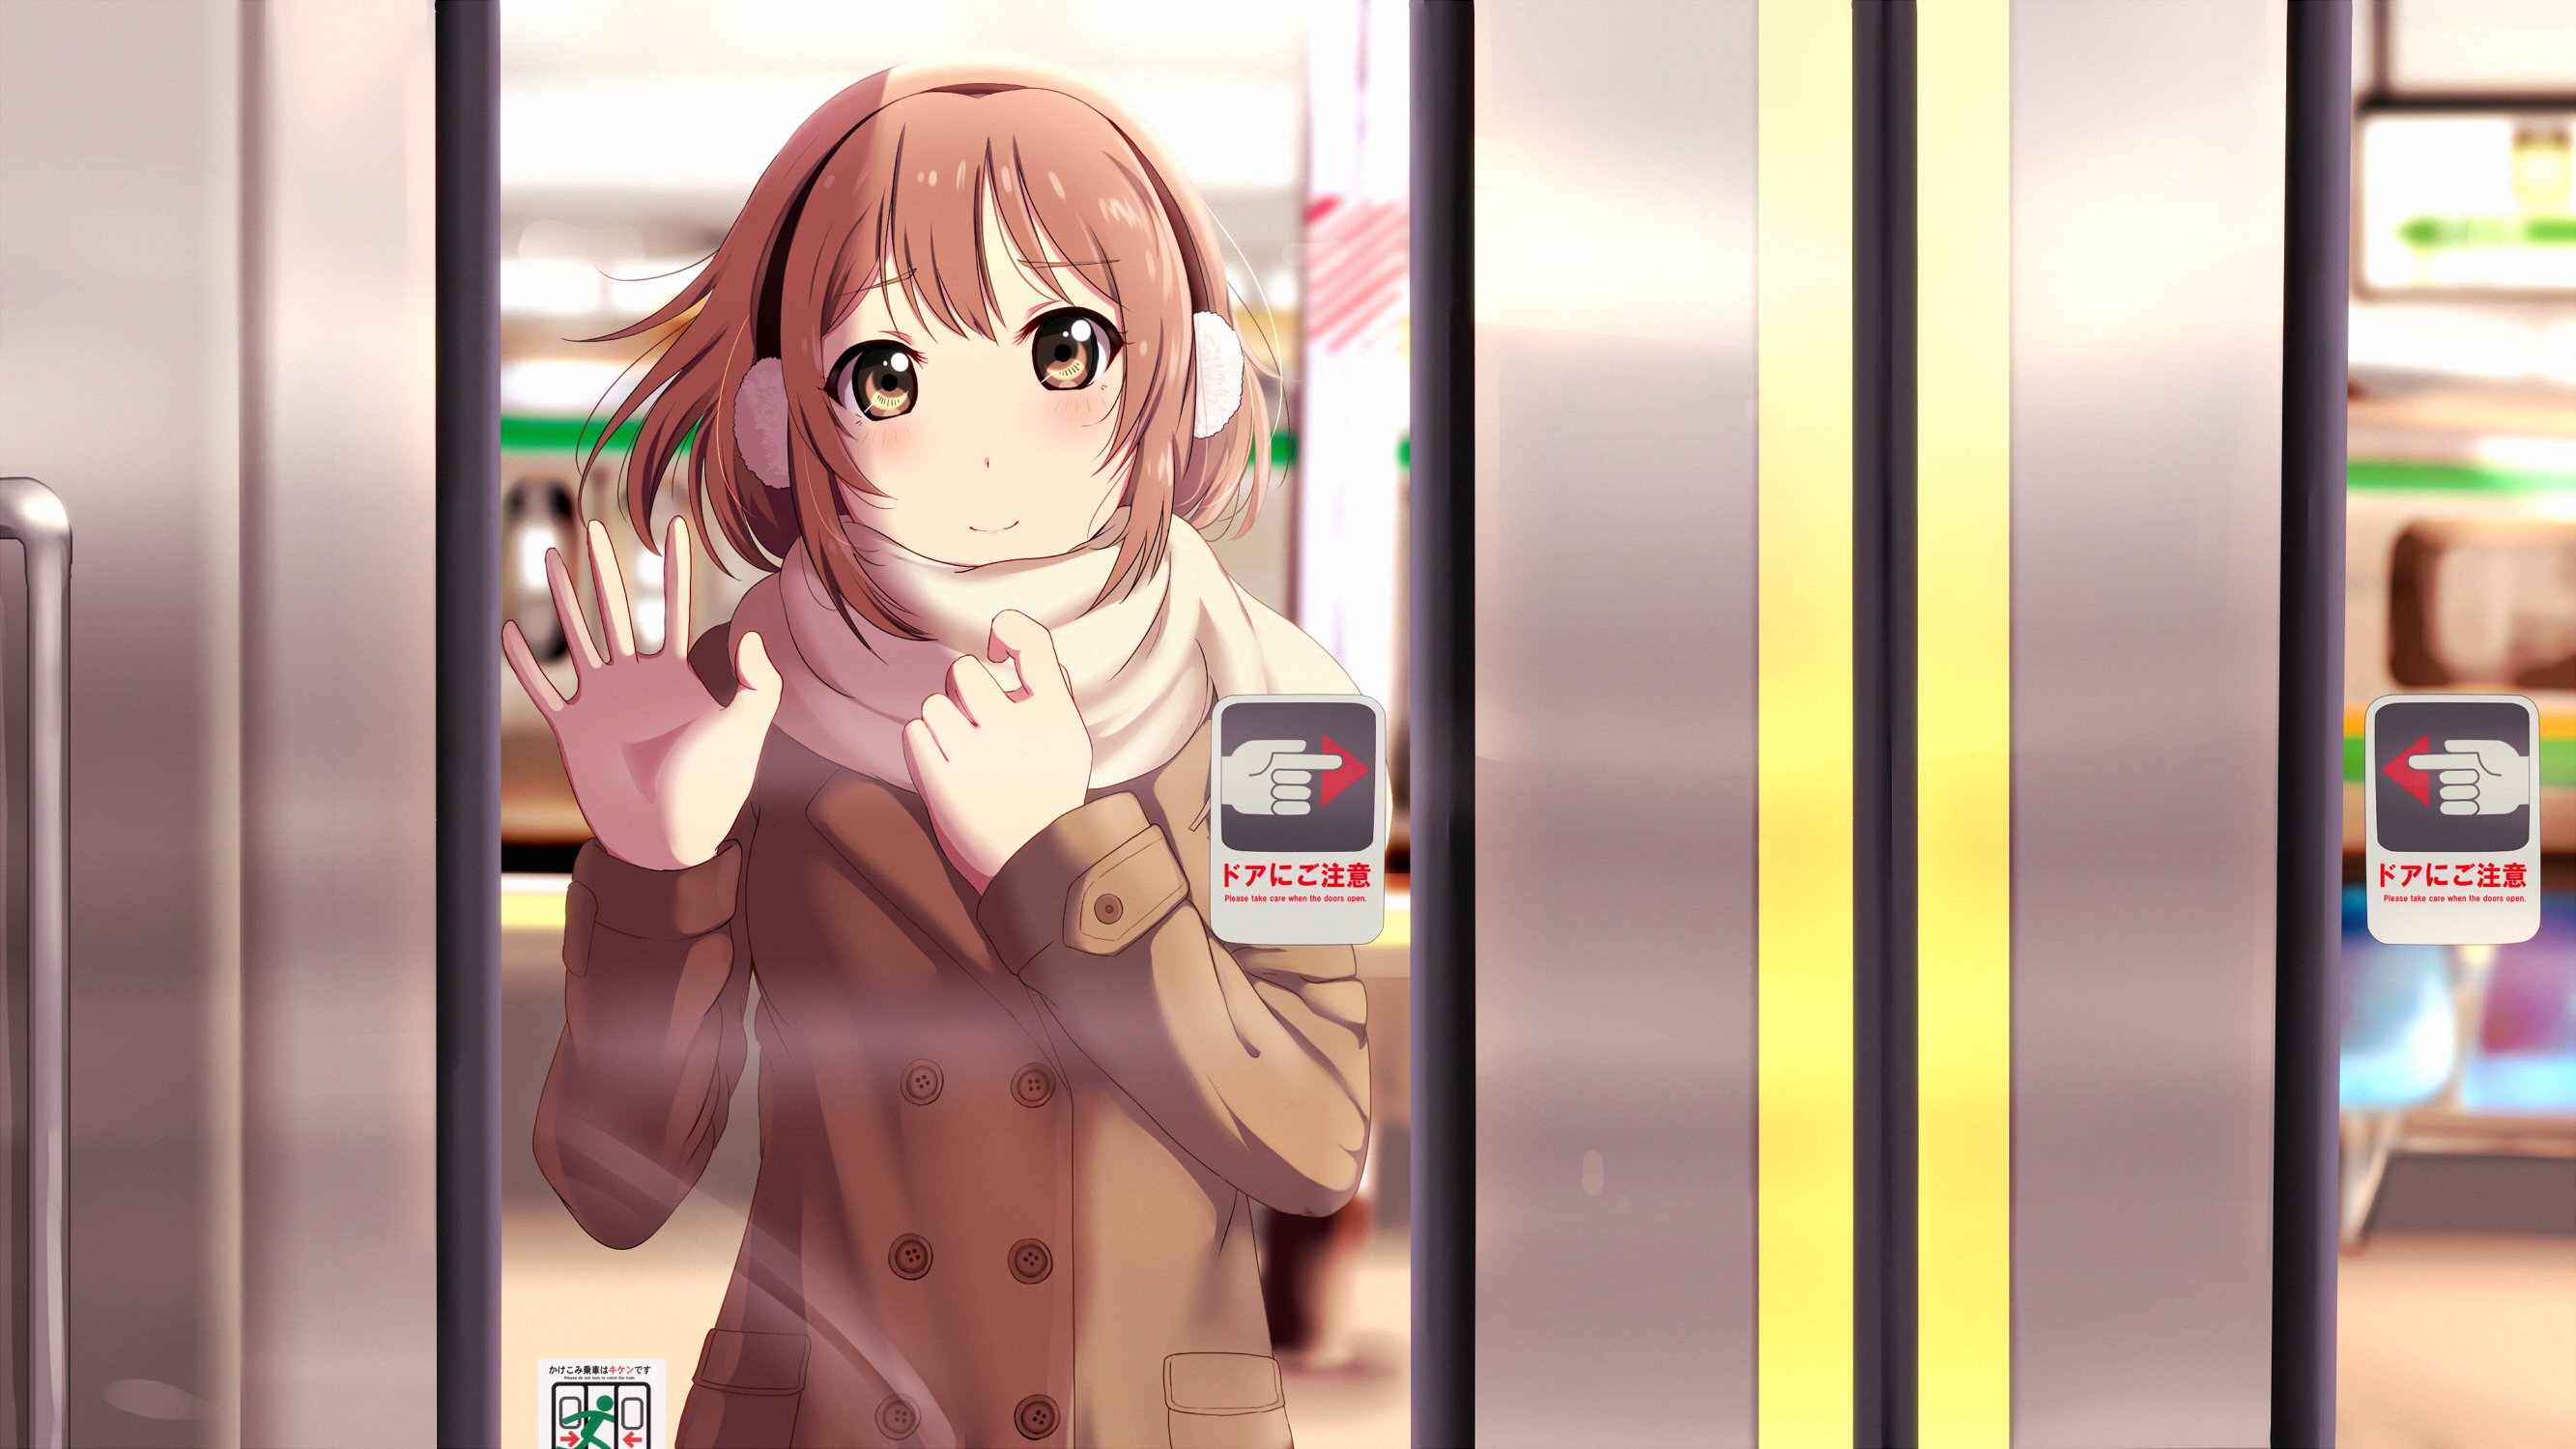 Wallpapers anime girl scarf winter on the desktop